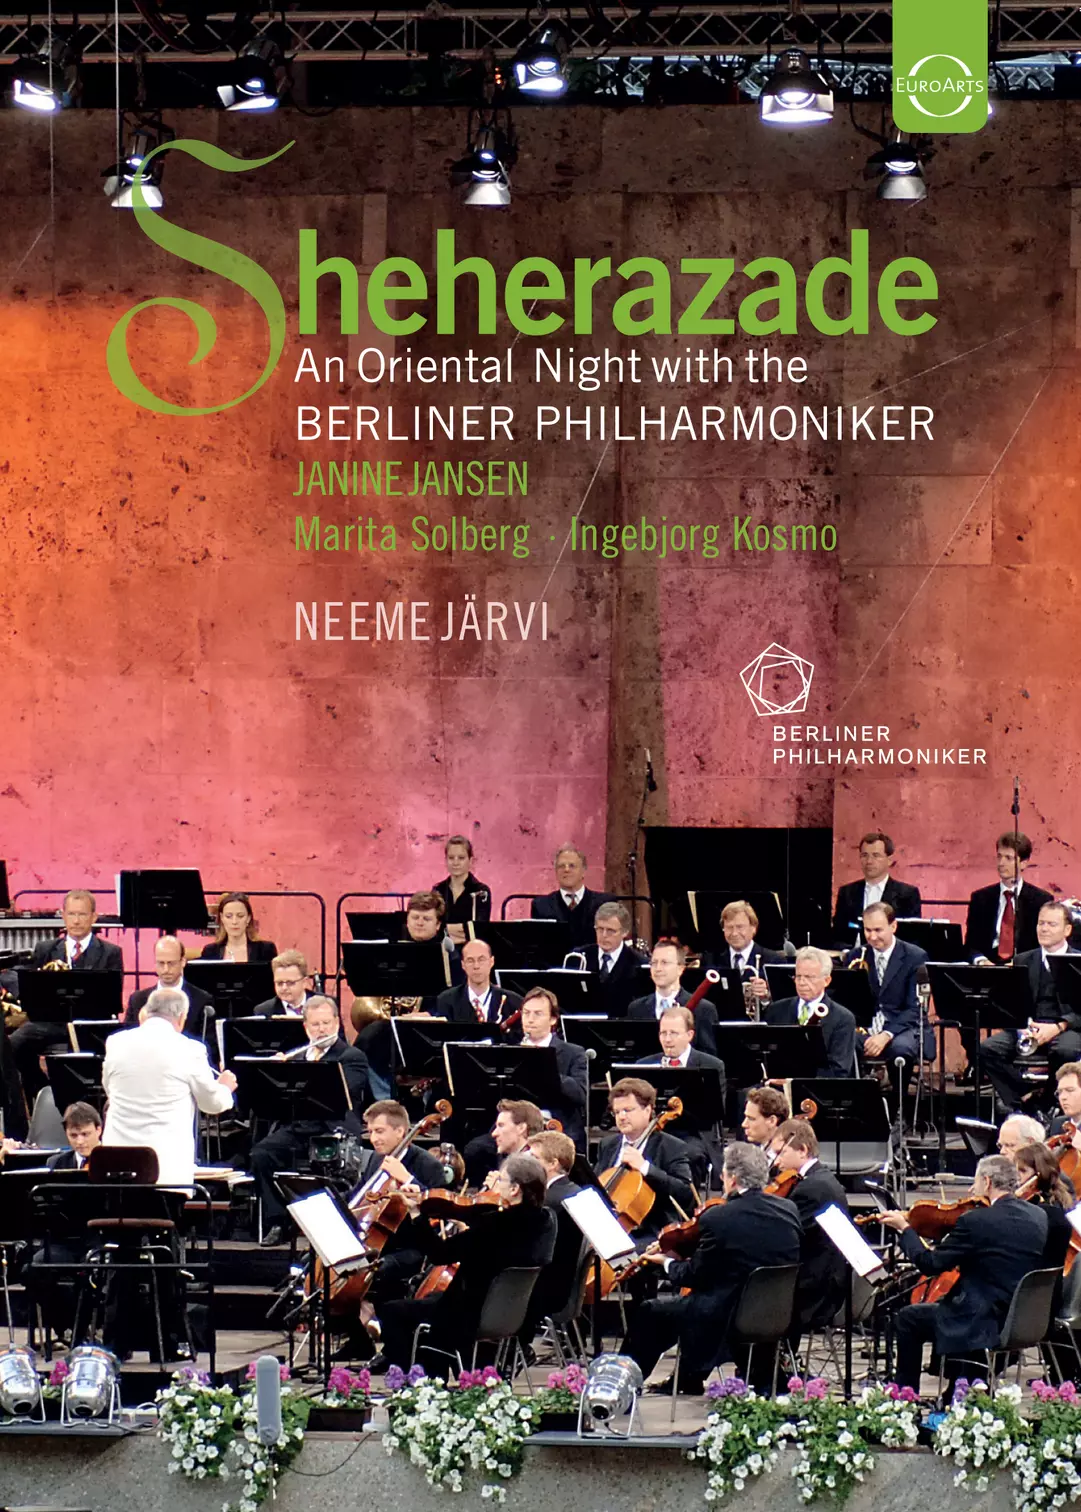 Sheherazade - An Oriental Night with the Berliner Philharmoniker - Waldbühne Berlin